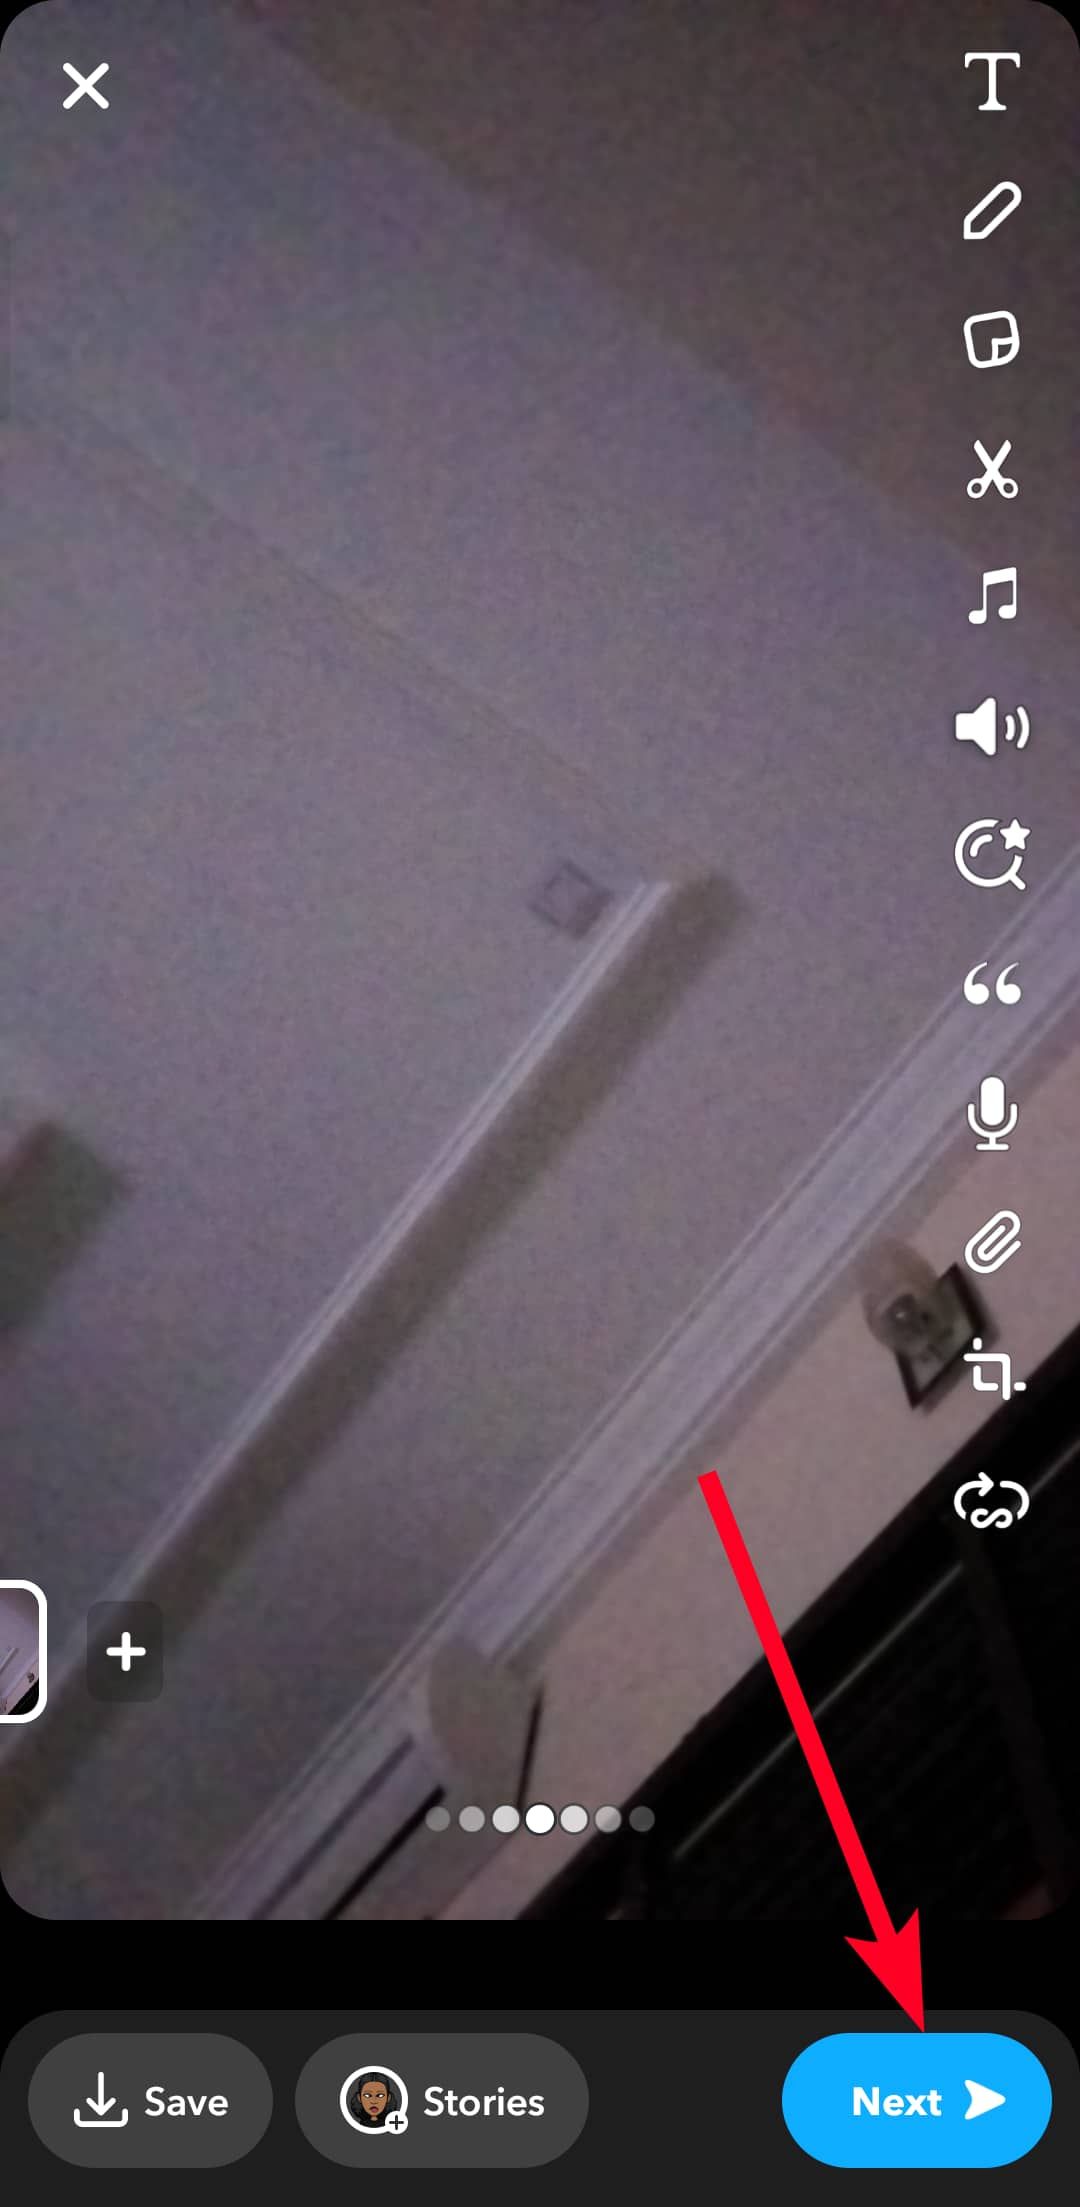 Gravando um vídeo no Snapchat